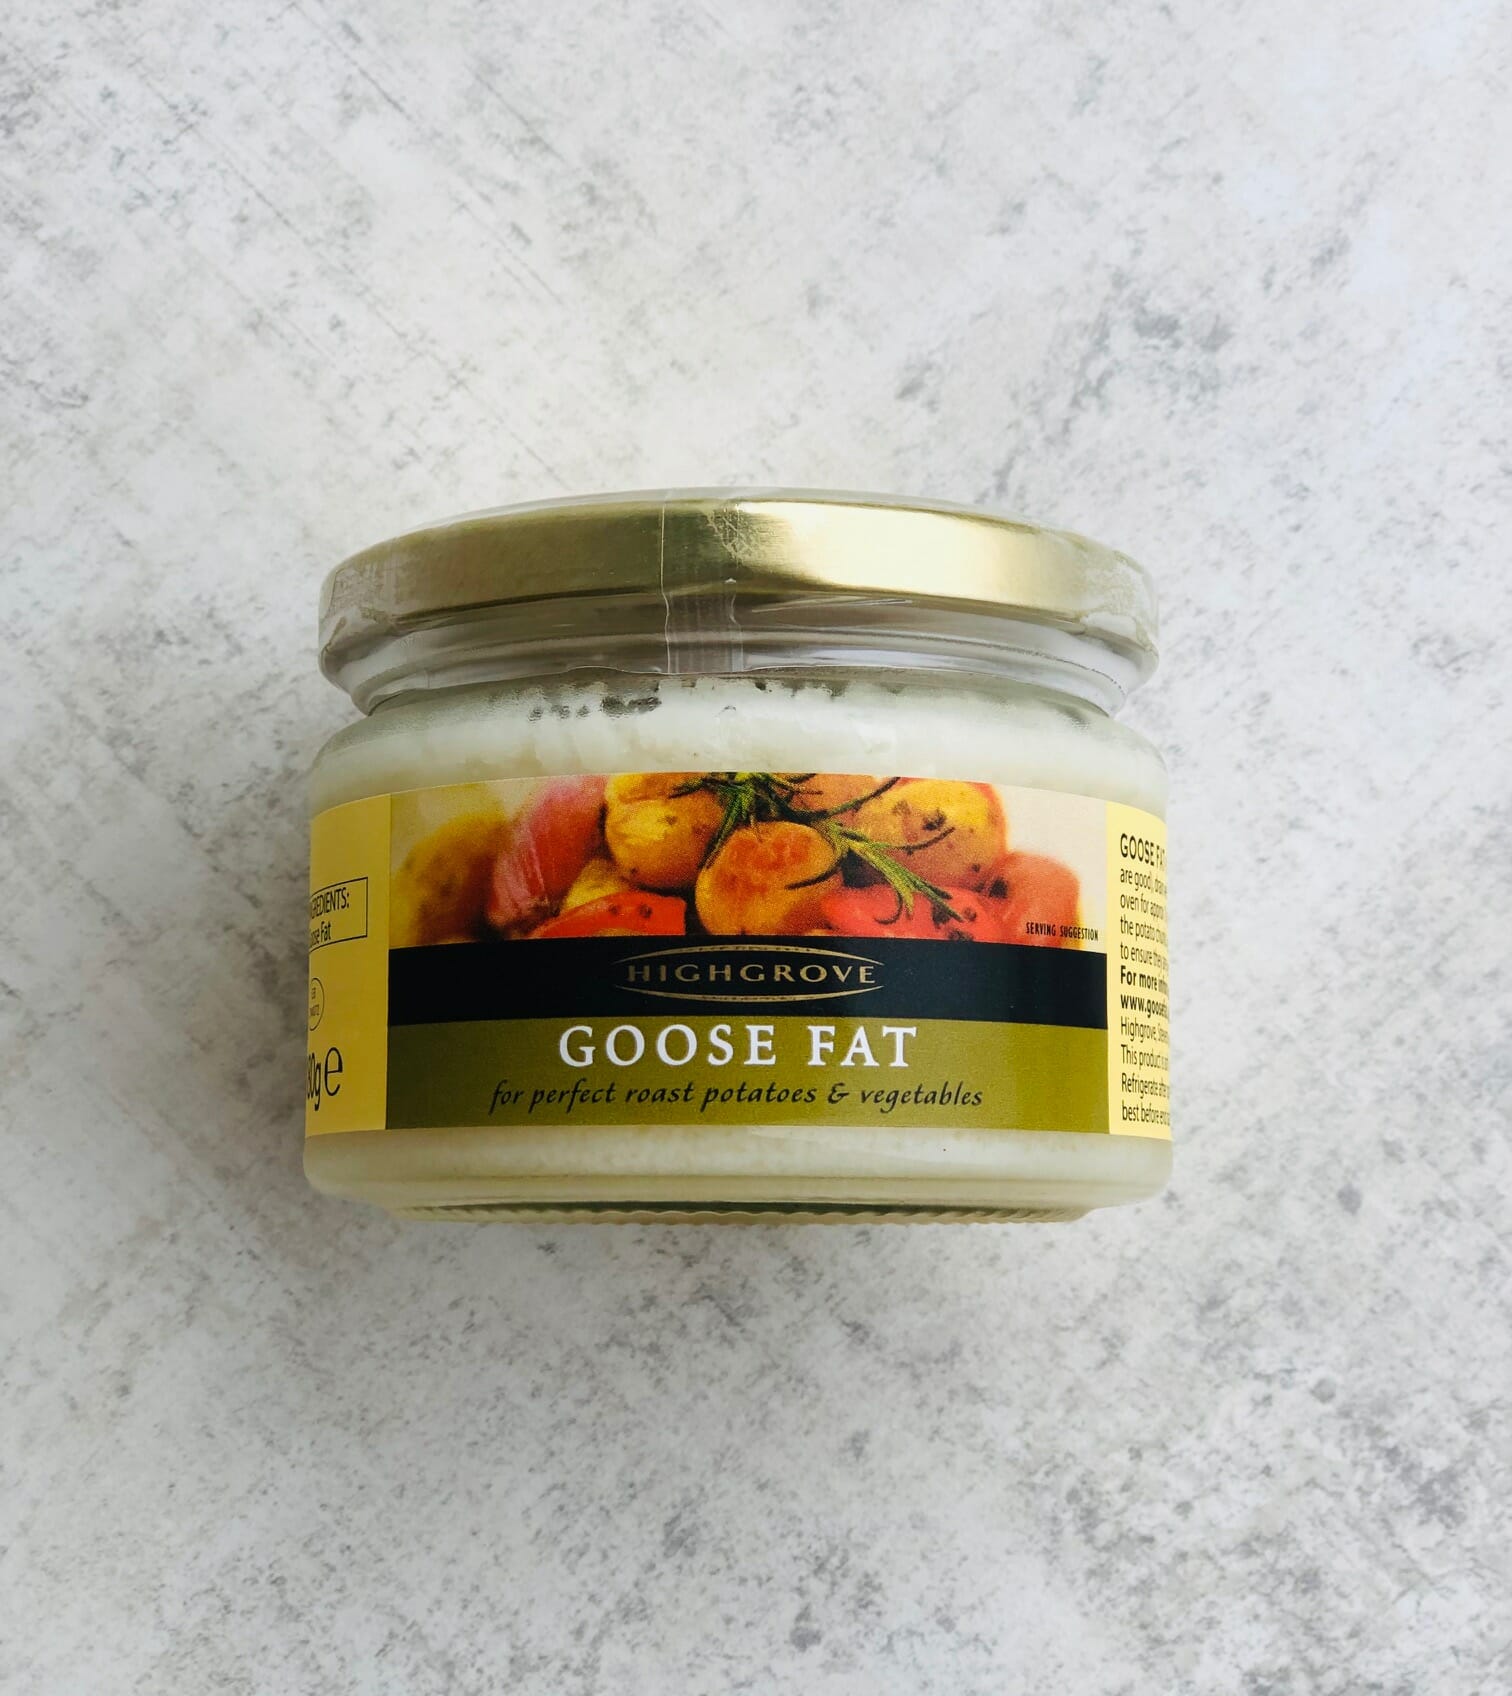 Hazlemere Fine Foods Free Range Goose Fat 220g